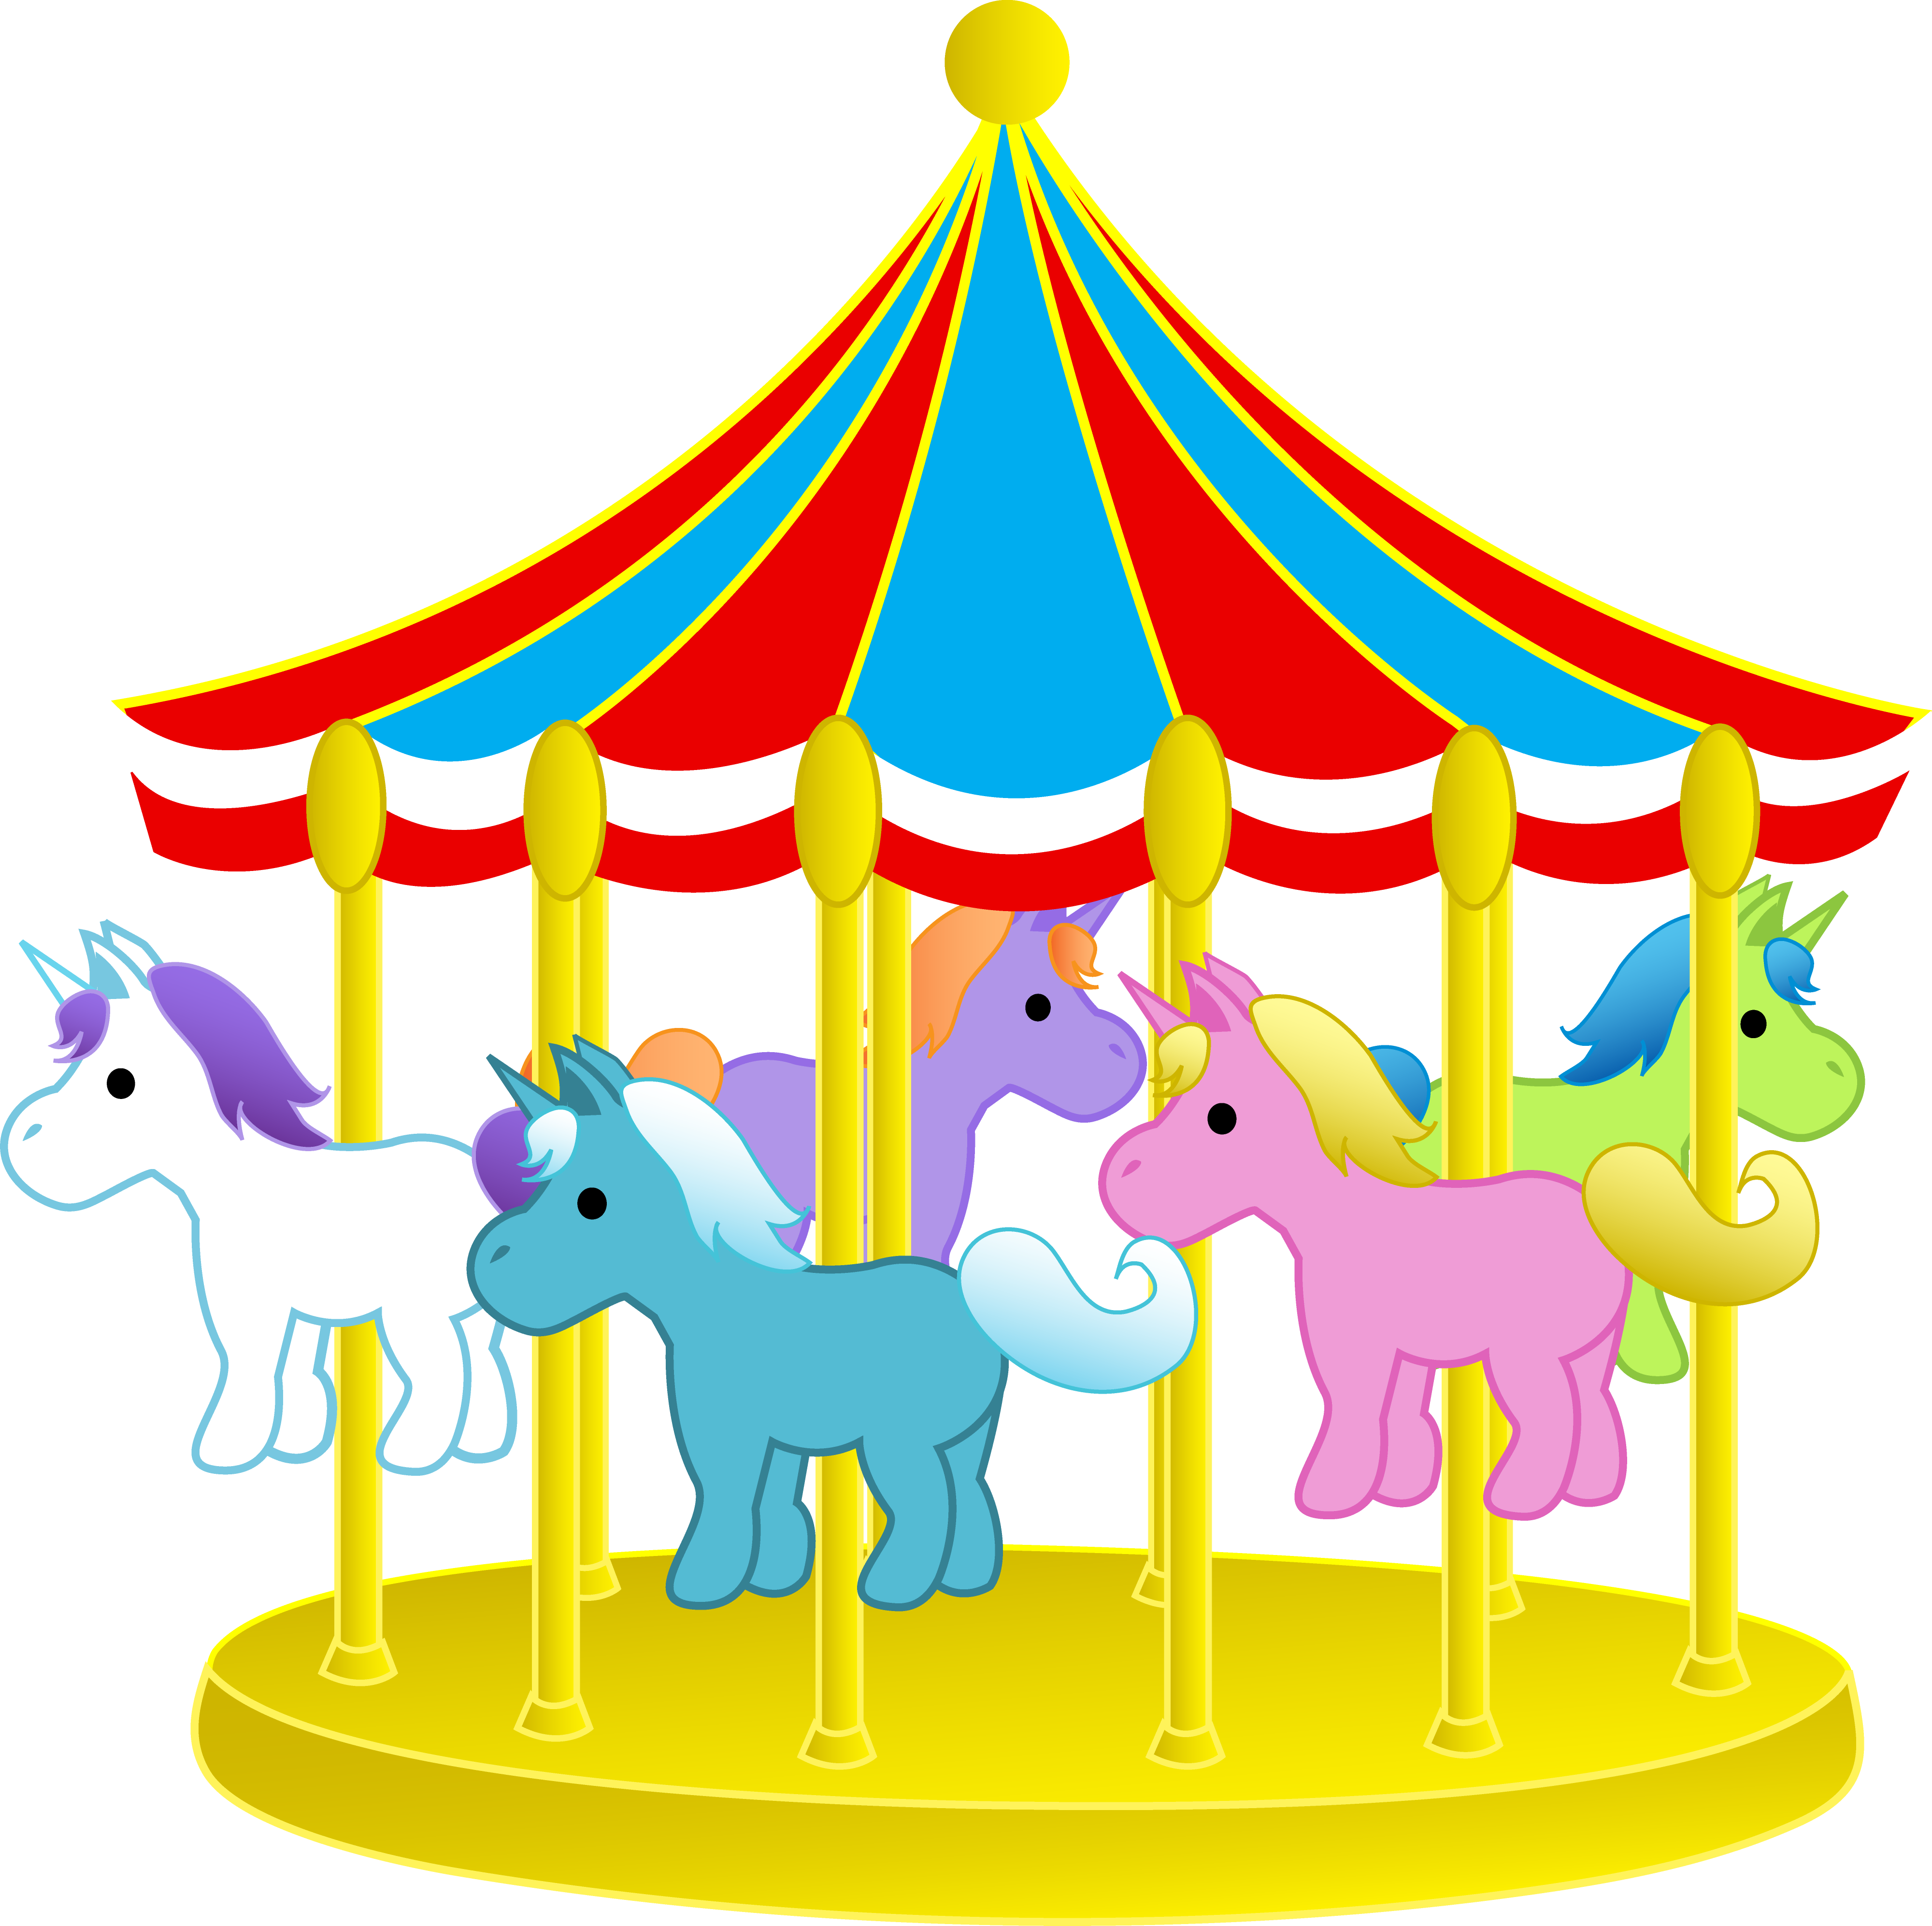 Clipart park simple park. Cute carnival carousel with